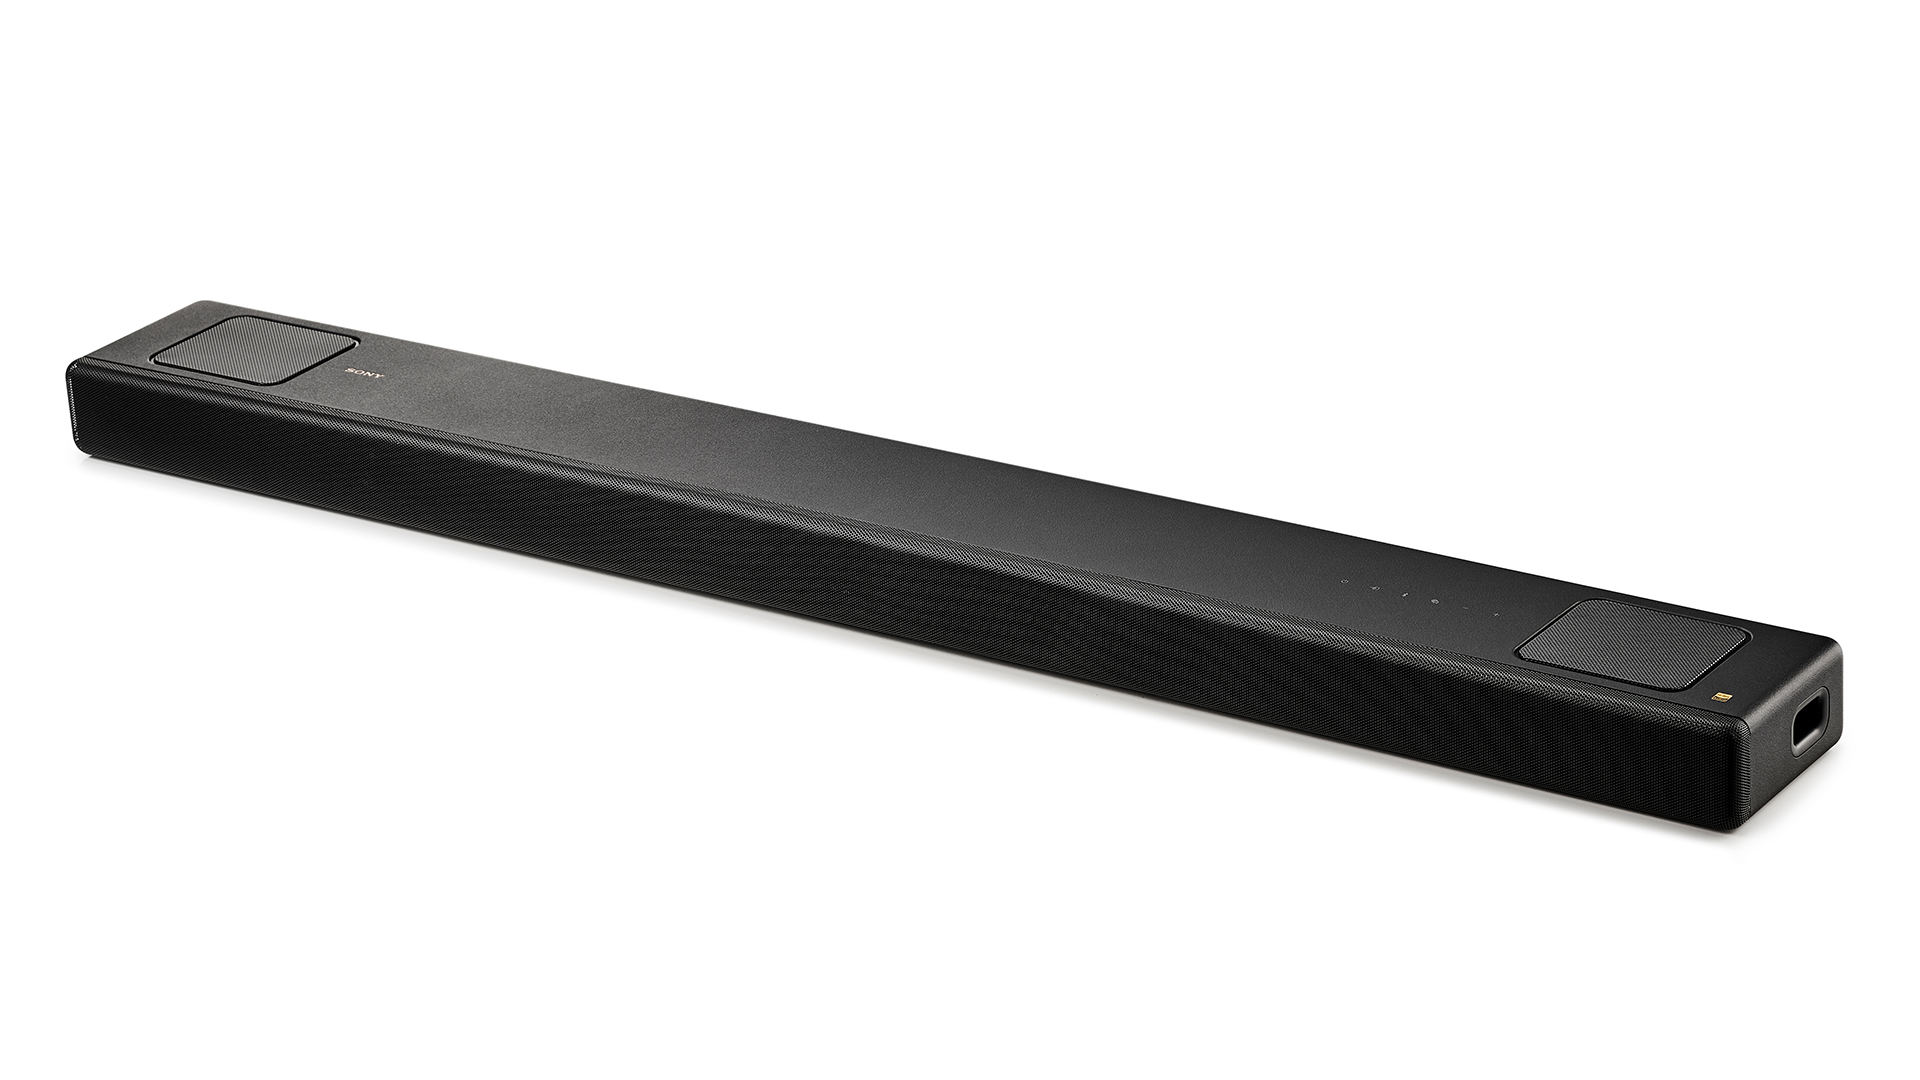 Sony HT-A5000 review: a Dolby Atmos soundbar with plenty to offer